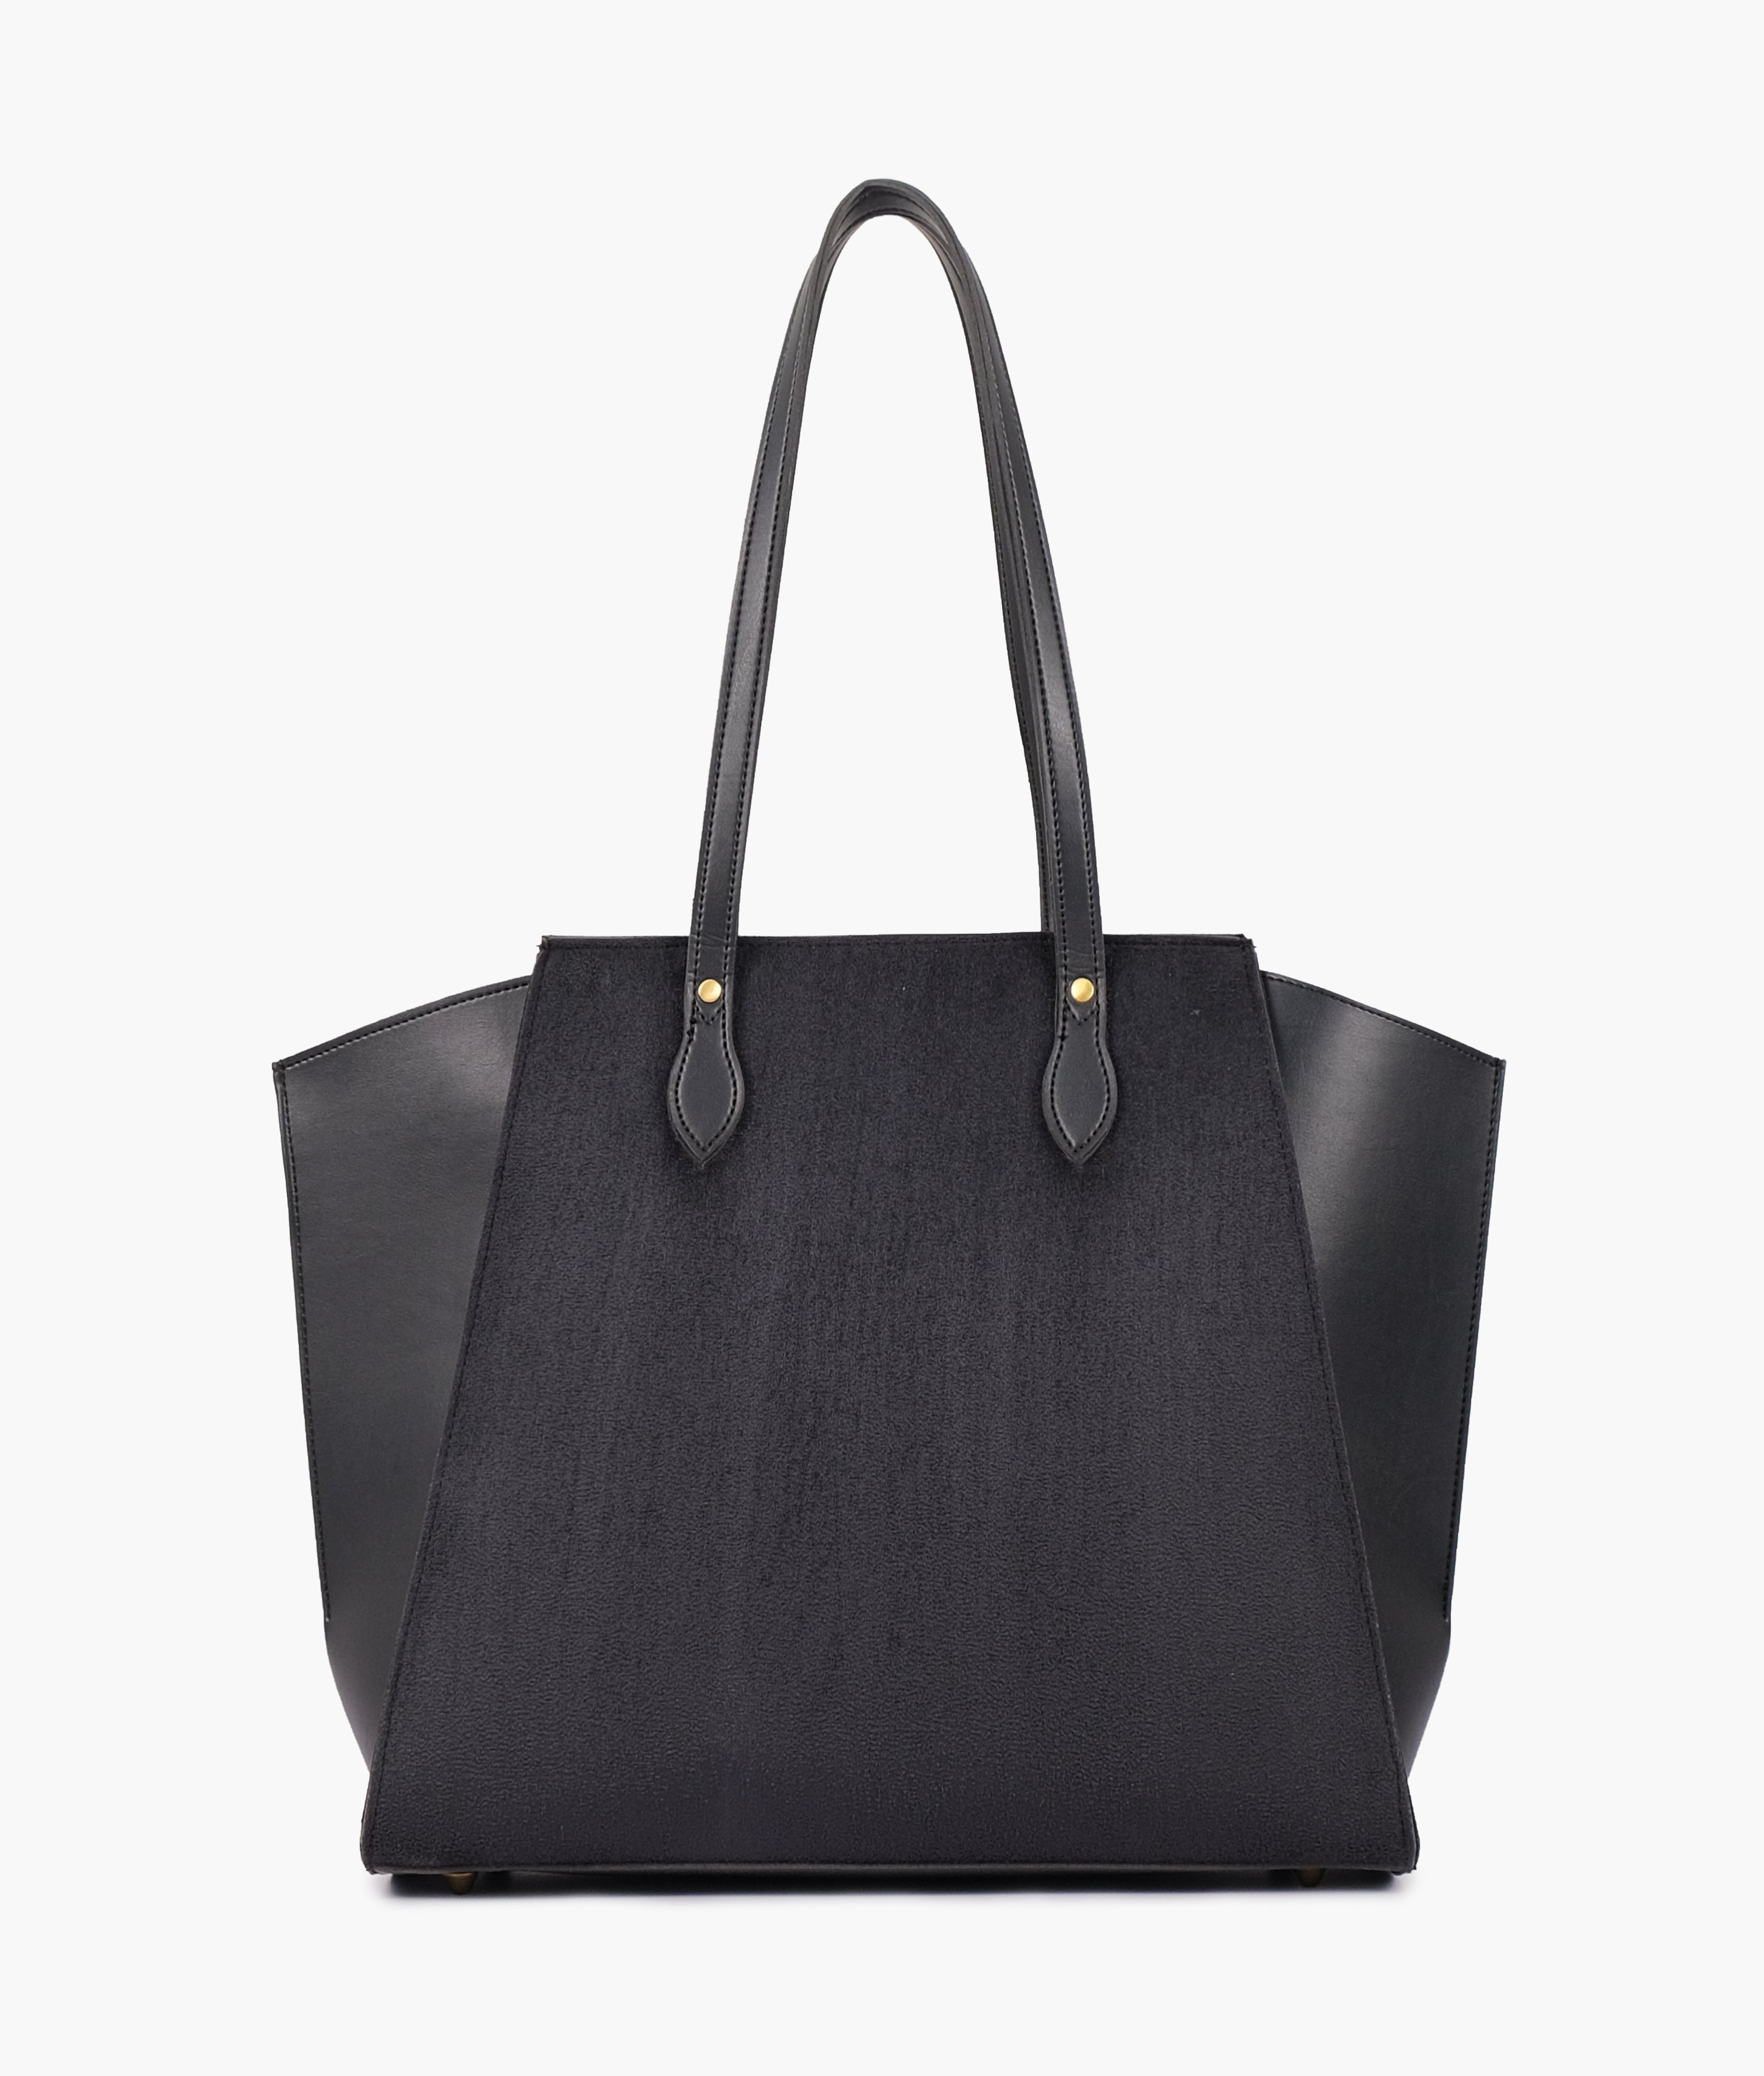 Black suede classic tote bag